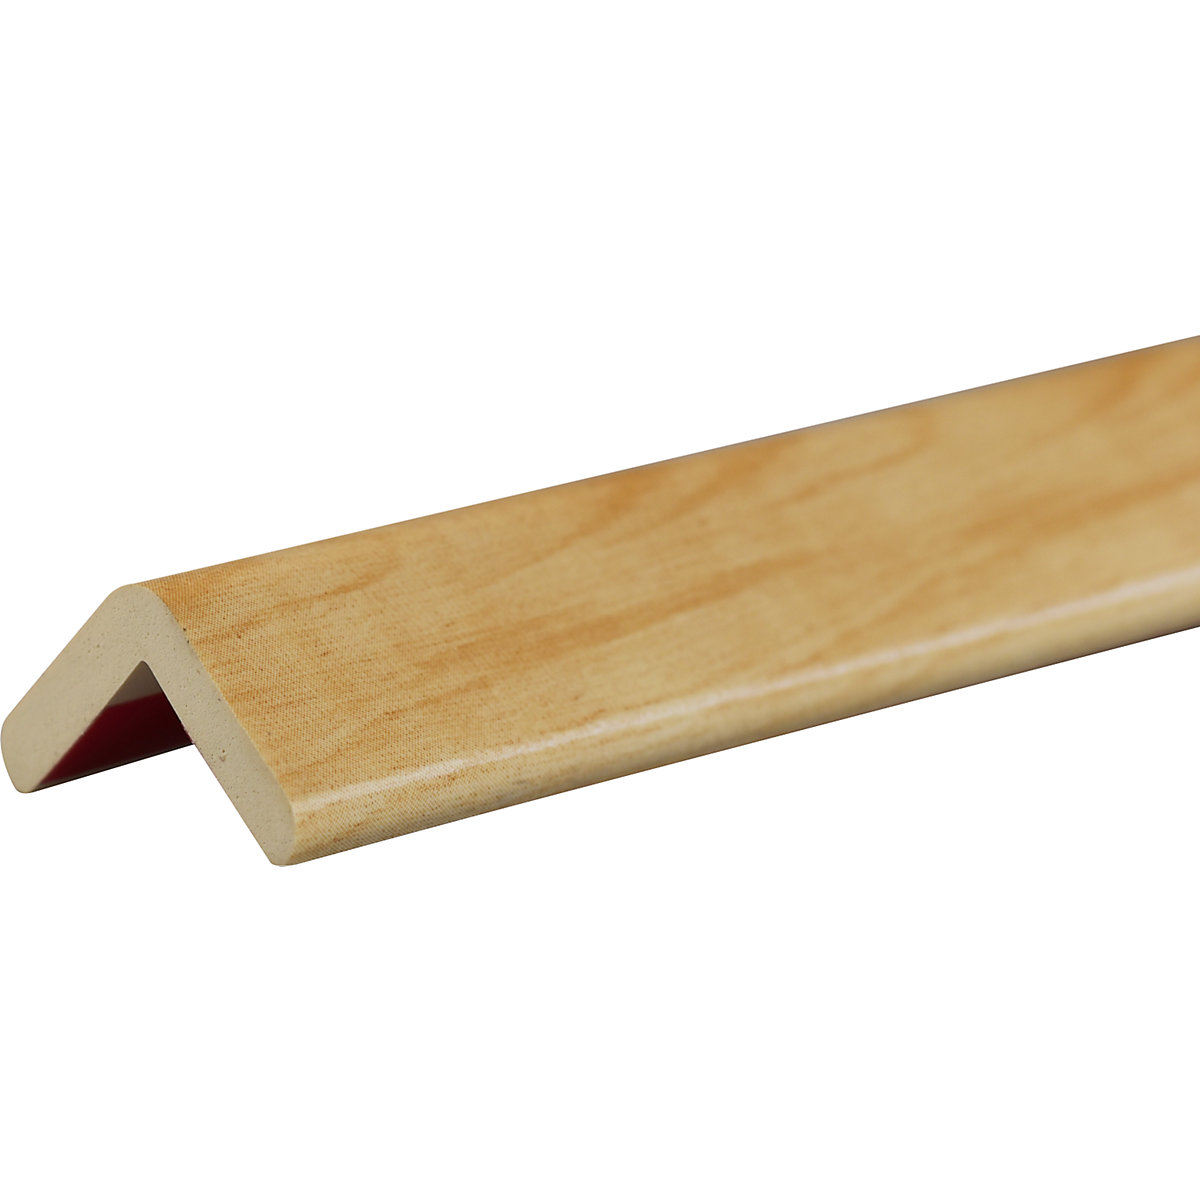 Knuffi® corner protection – SHG, type H, 1 m piece, natural wood finish-19